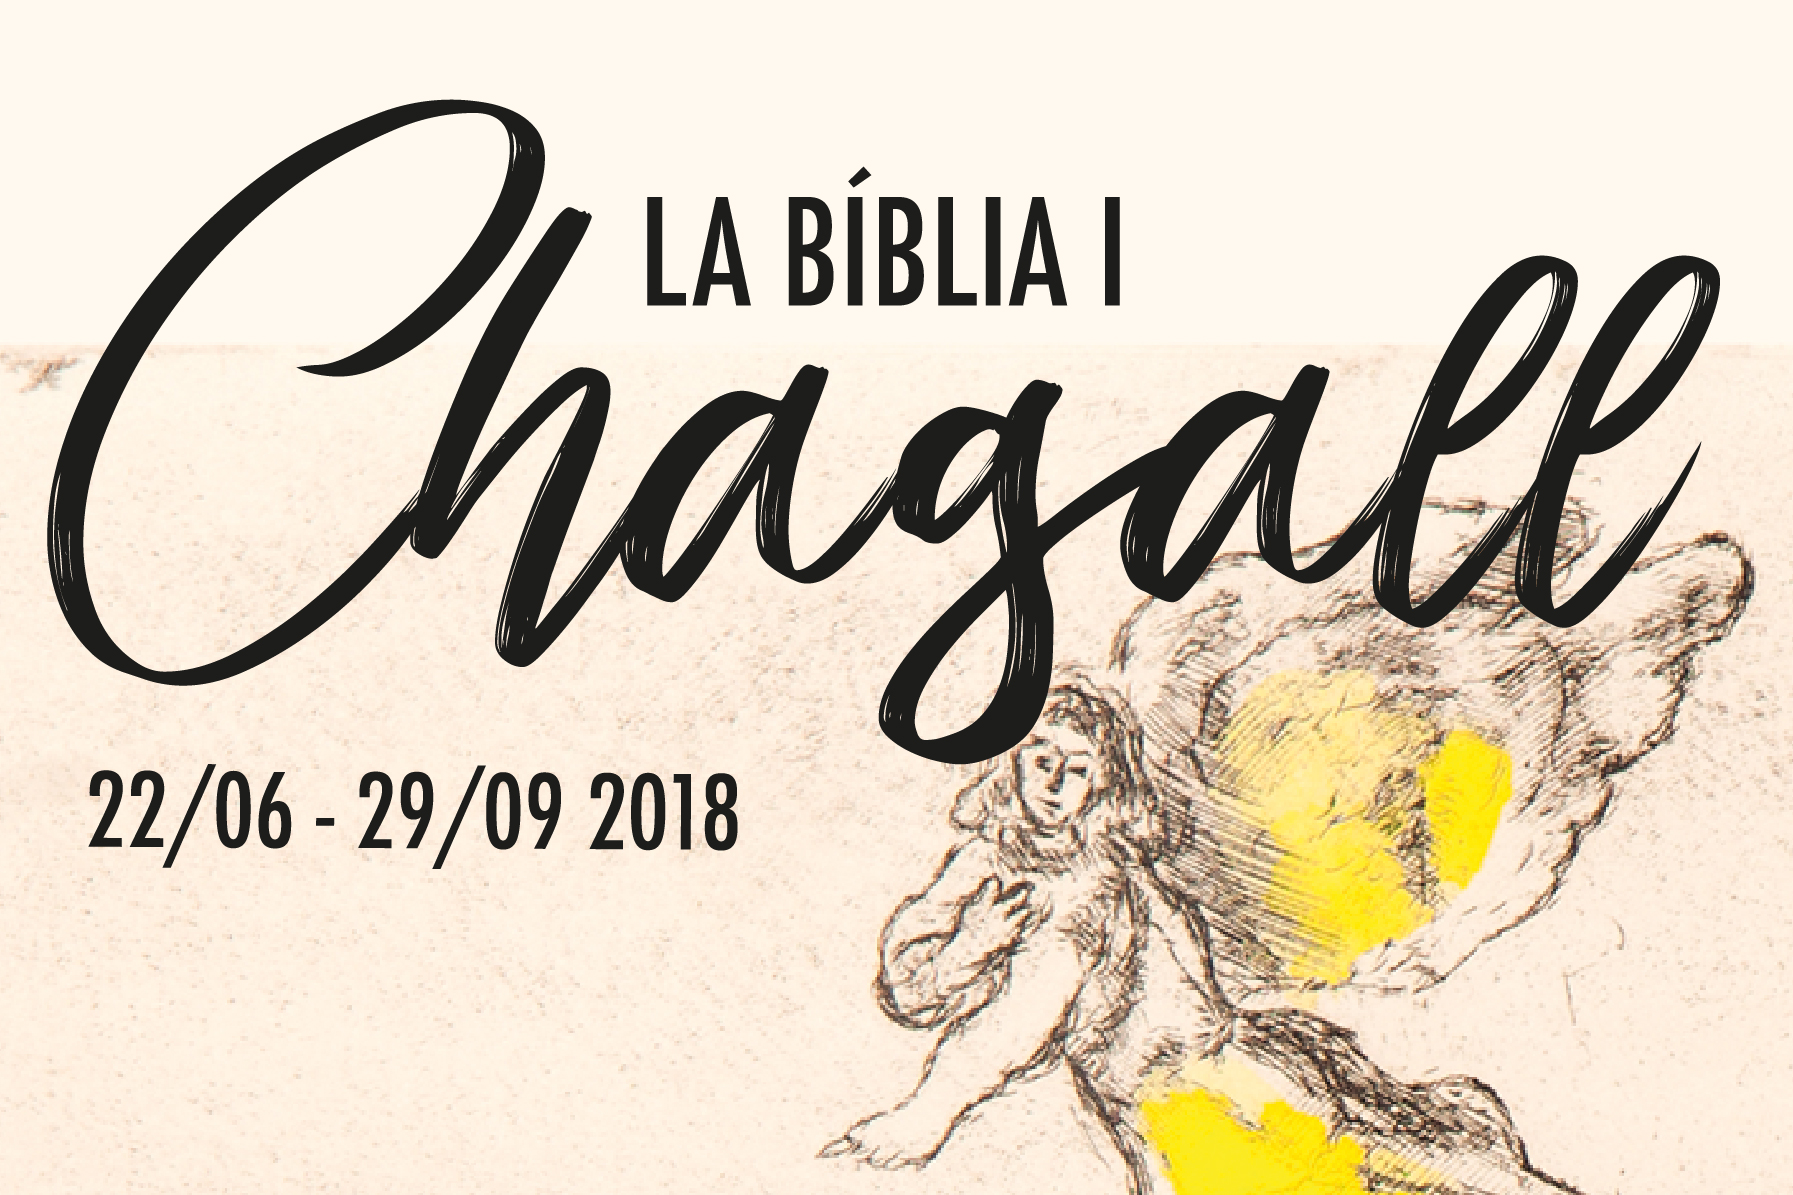 La Bíblia i Chagall